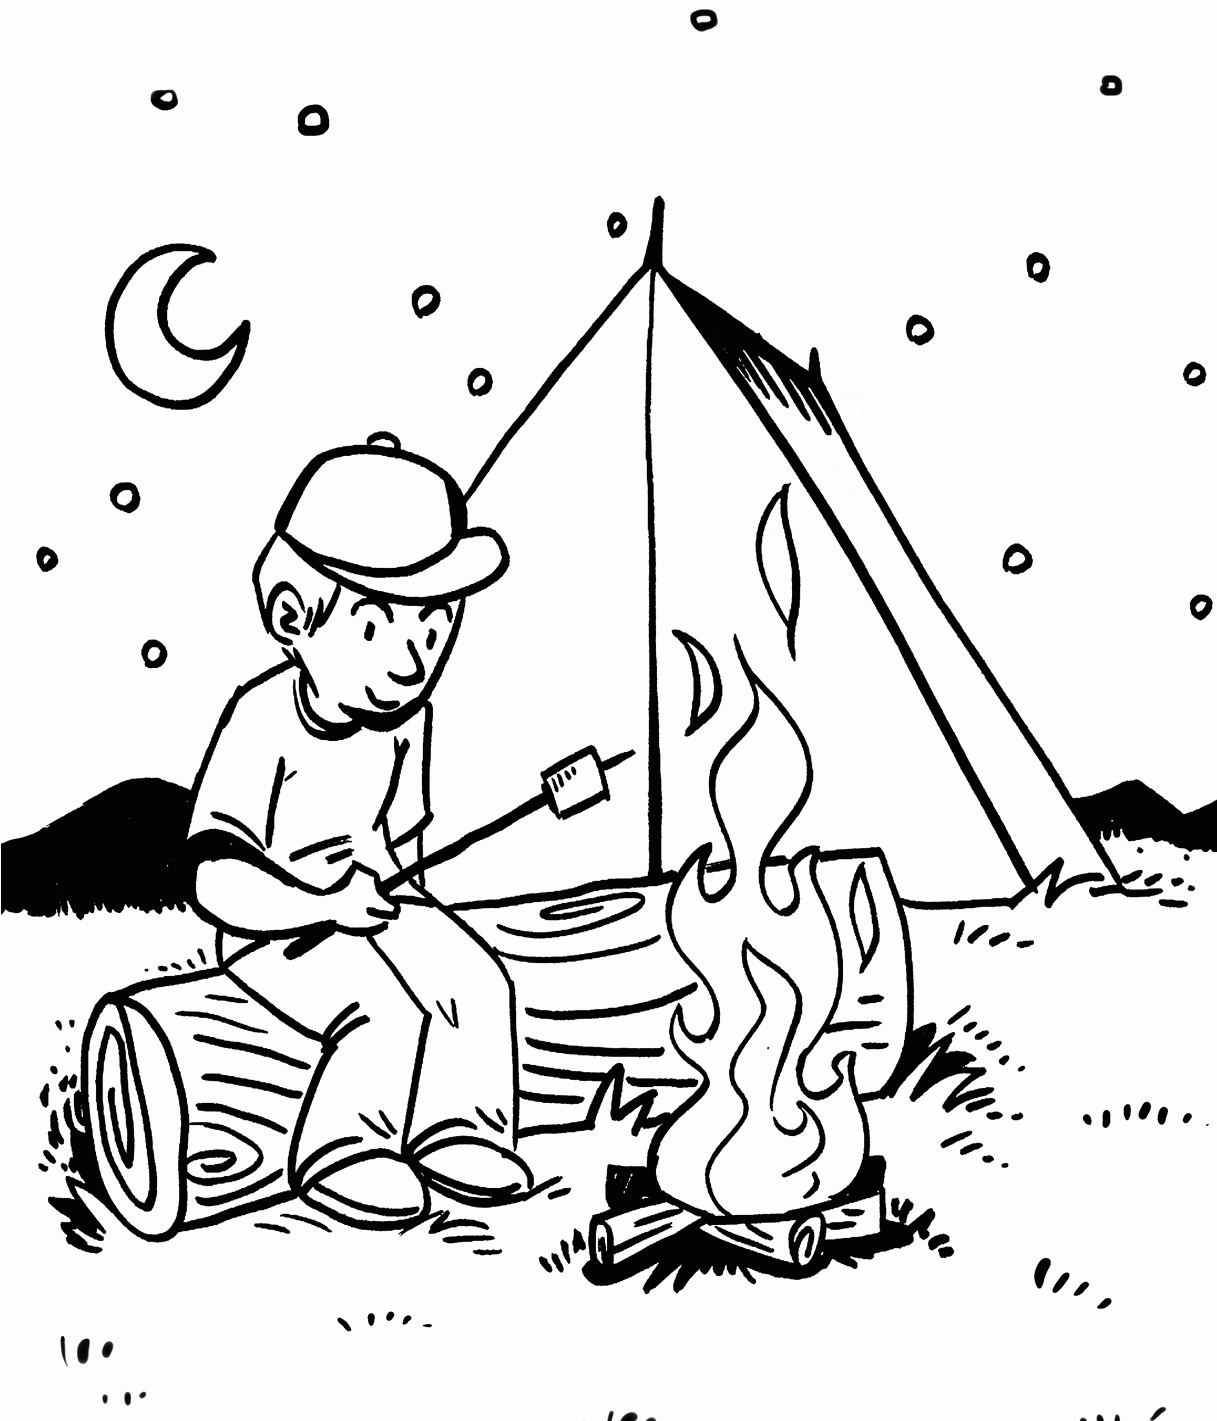 Camping Printables Free